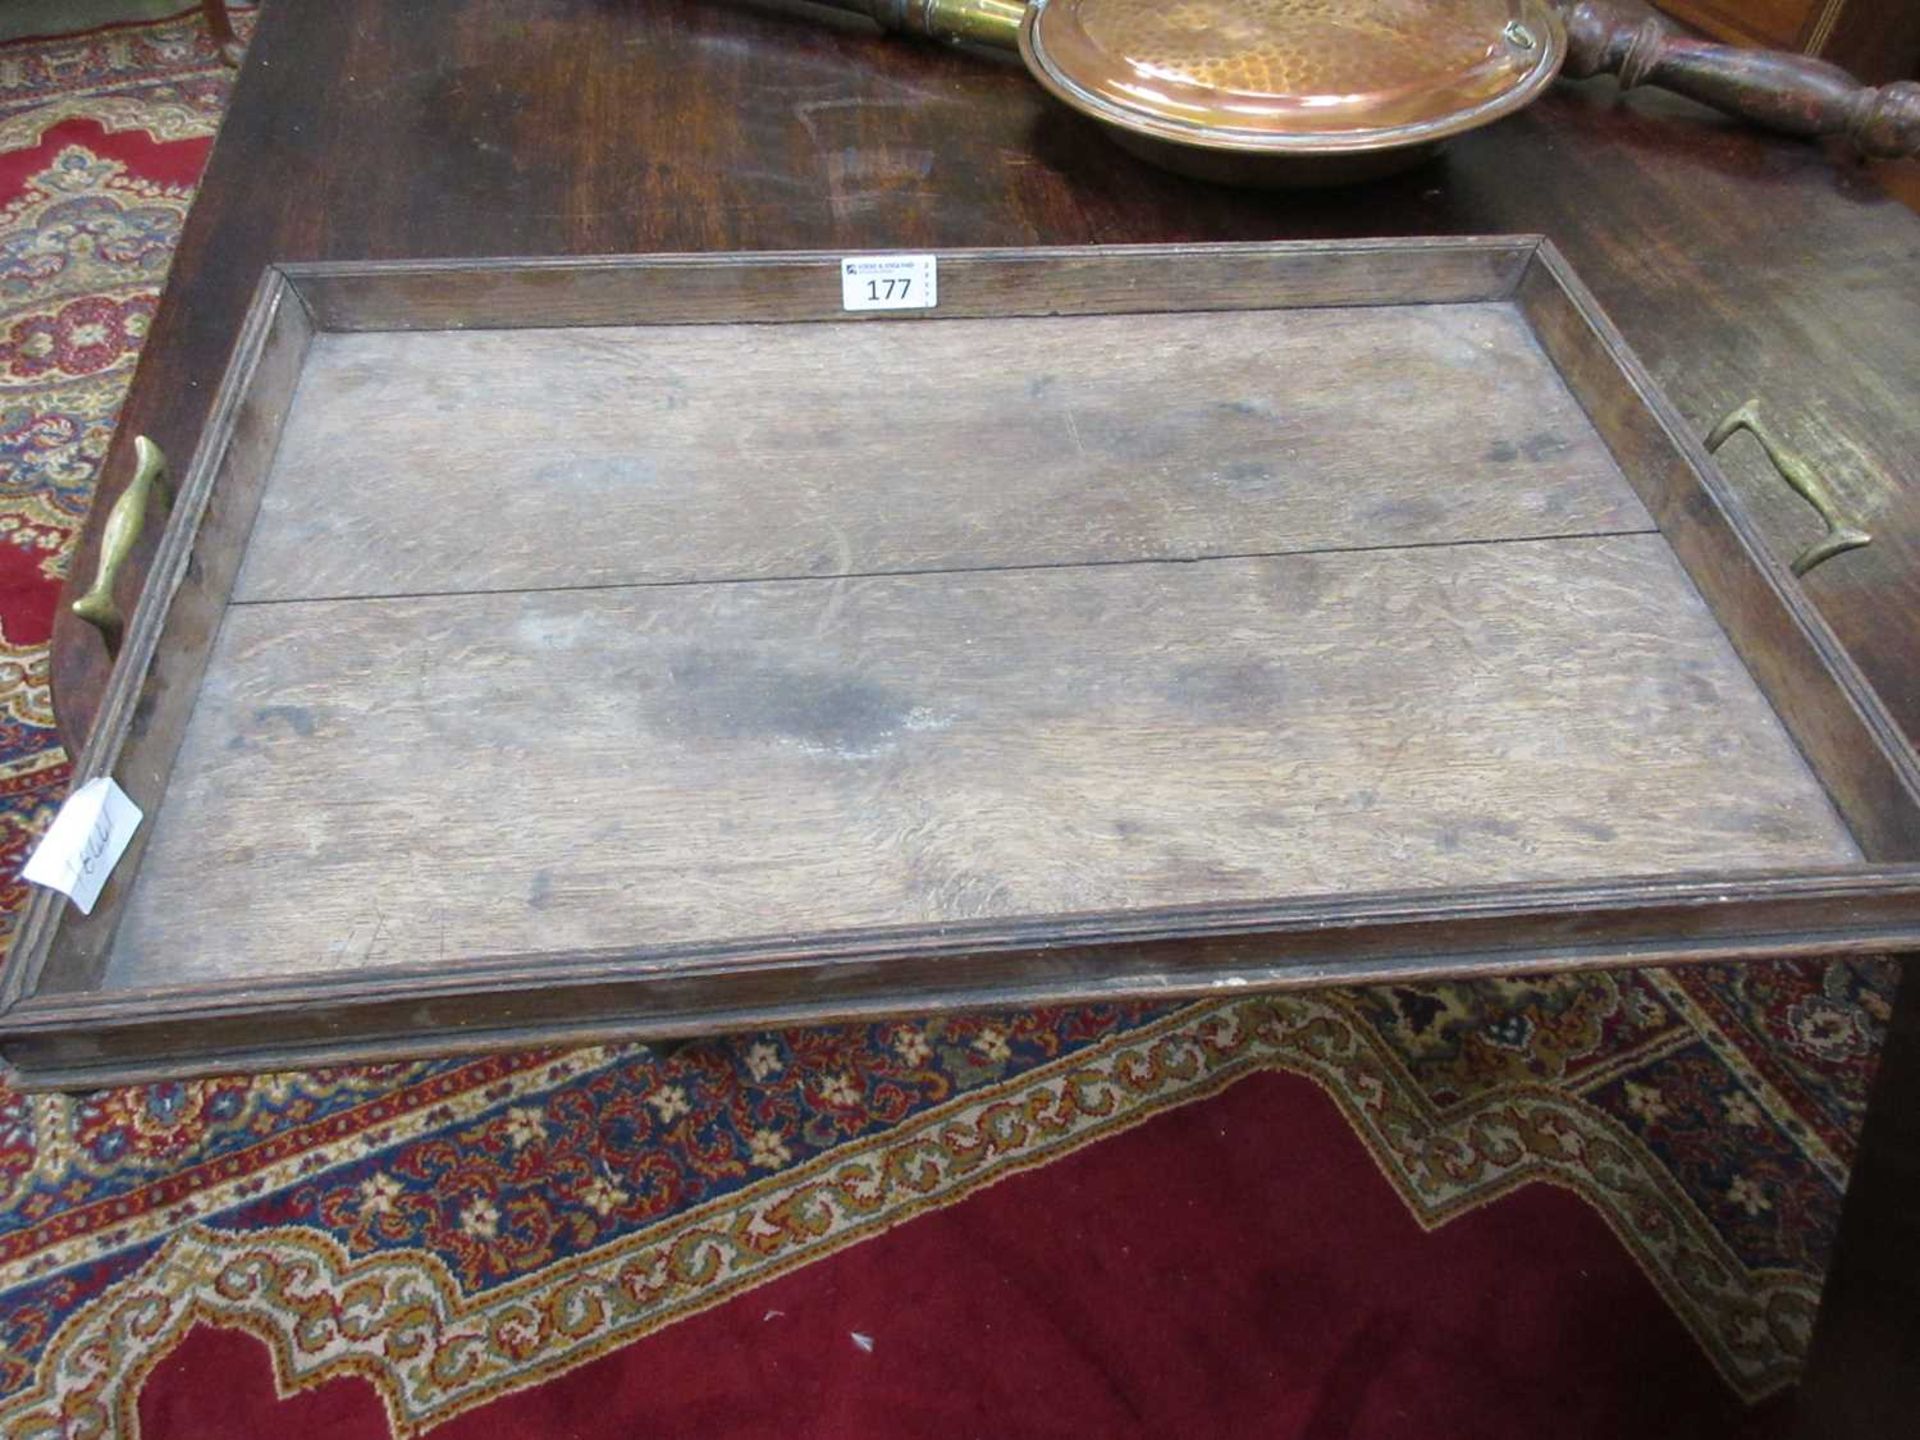 An early 20th century oak twin handled tray